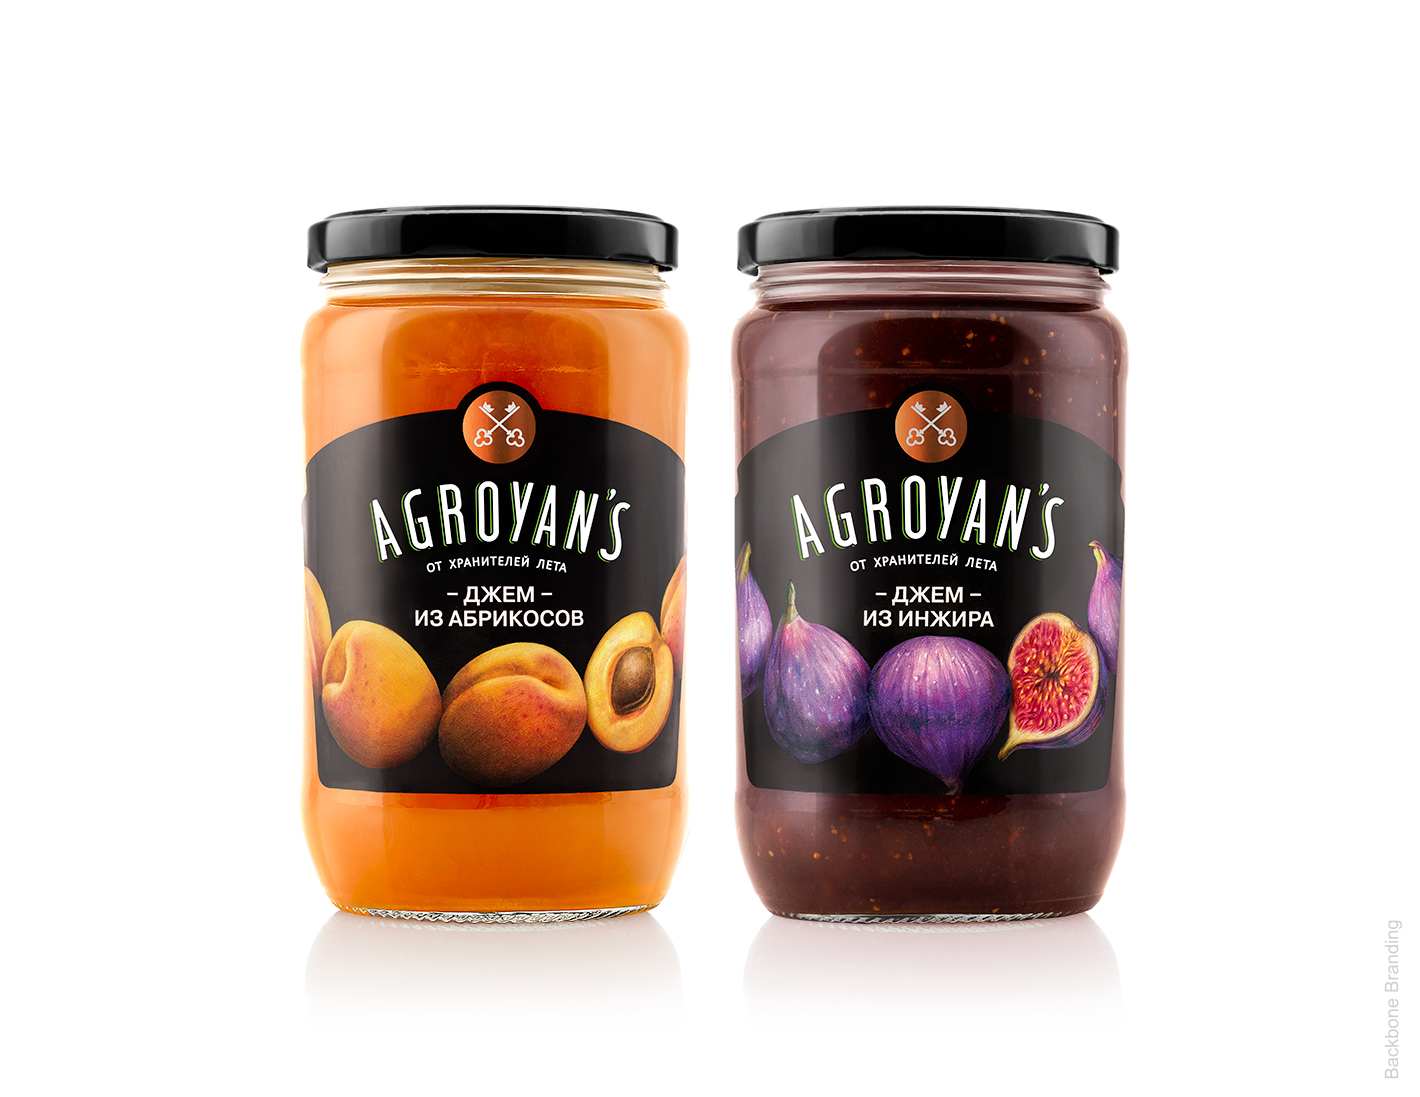 Agroyan’s罐头果酱包装